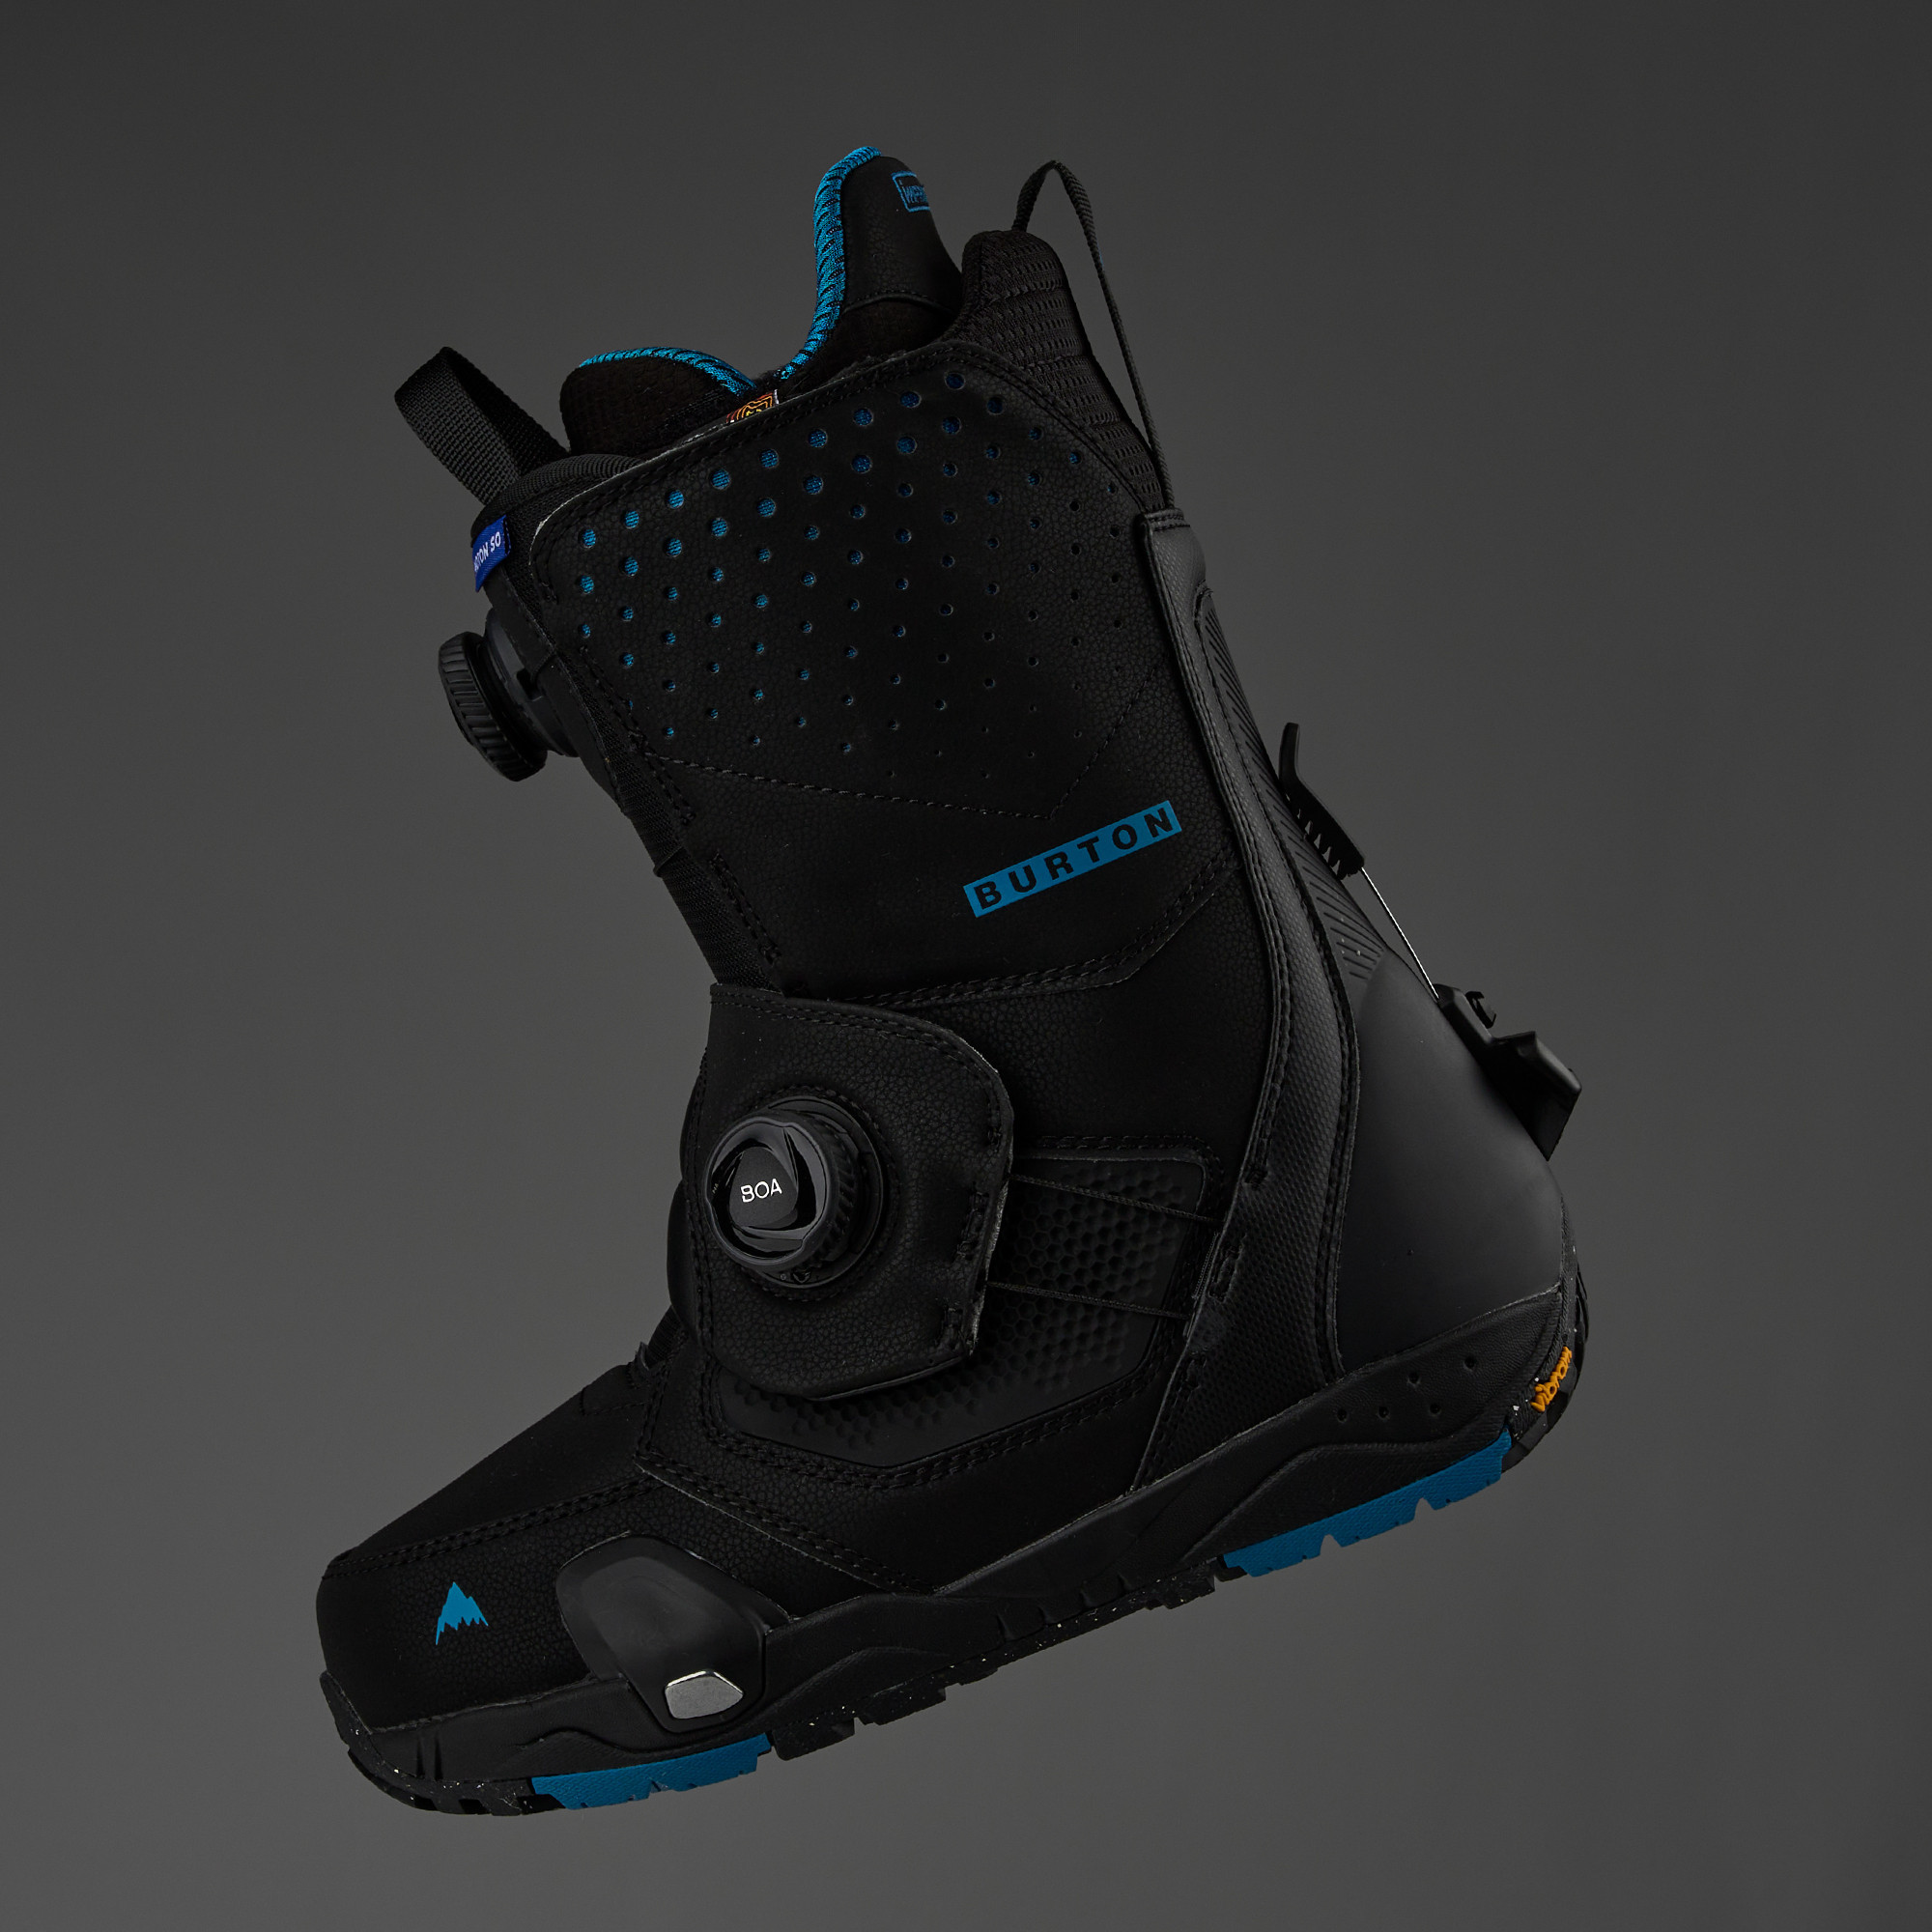 Men's Burton Photon Step On® Snowboard Boots